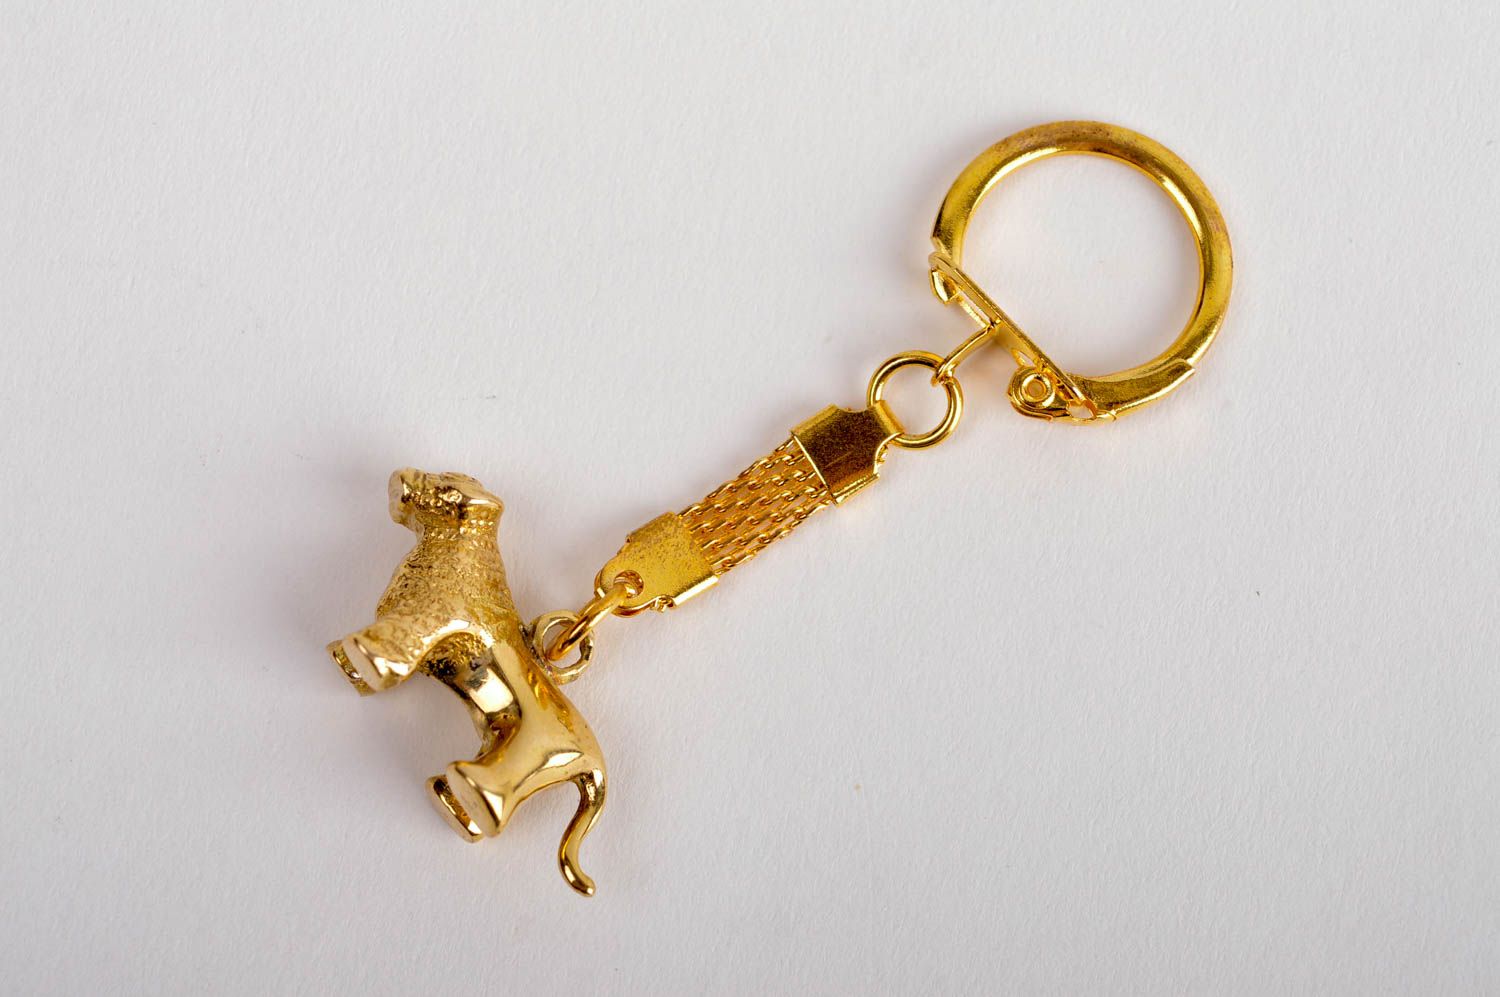 Beautiful handmade metal keychain stylish keychain design metal craft gift ideas photo 4